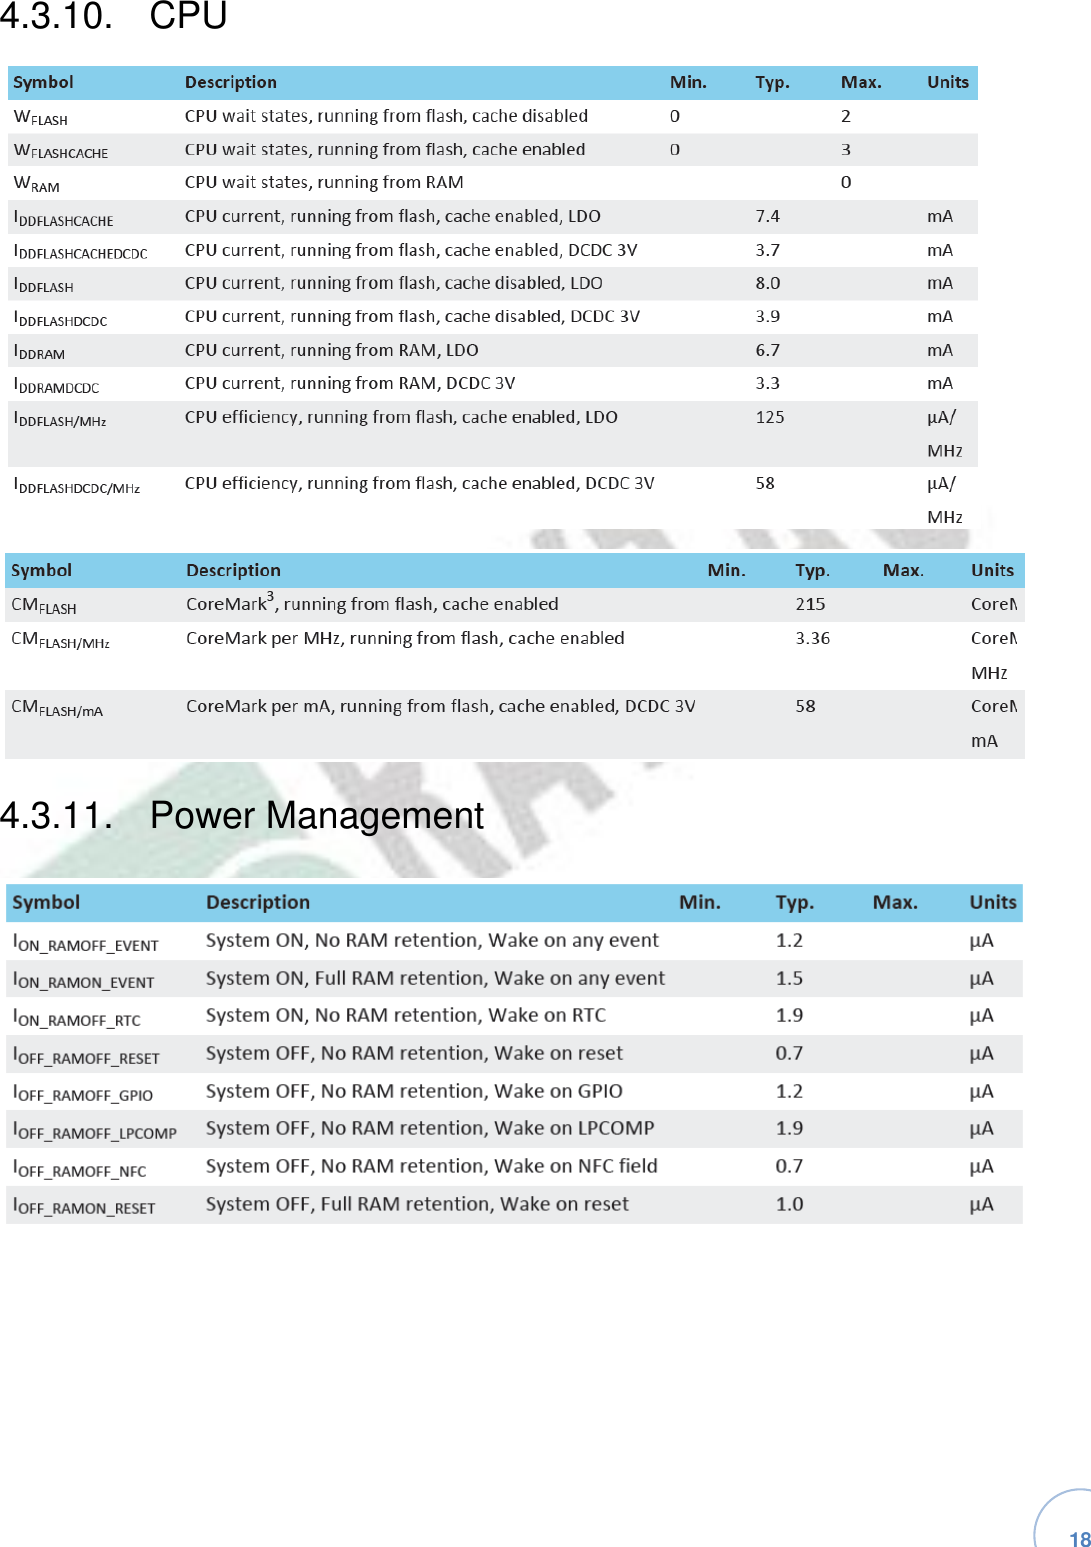   18 4.3.10.  CPU4.3.11.  Power Management